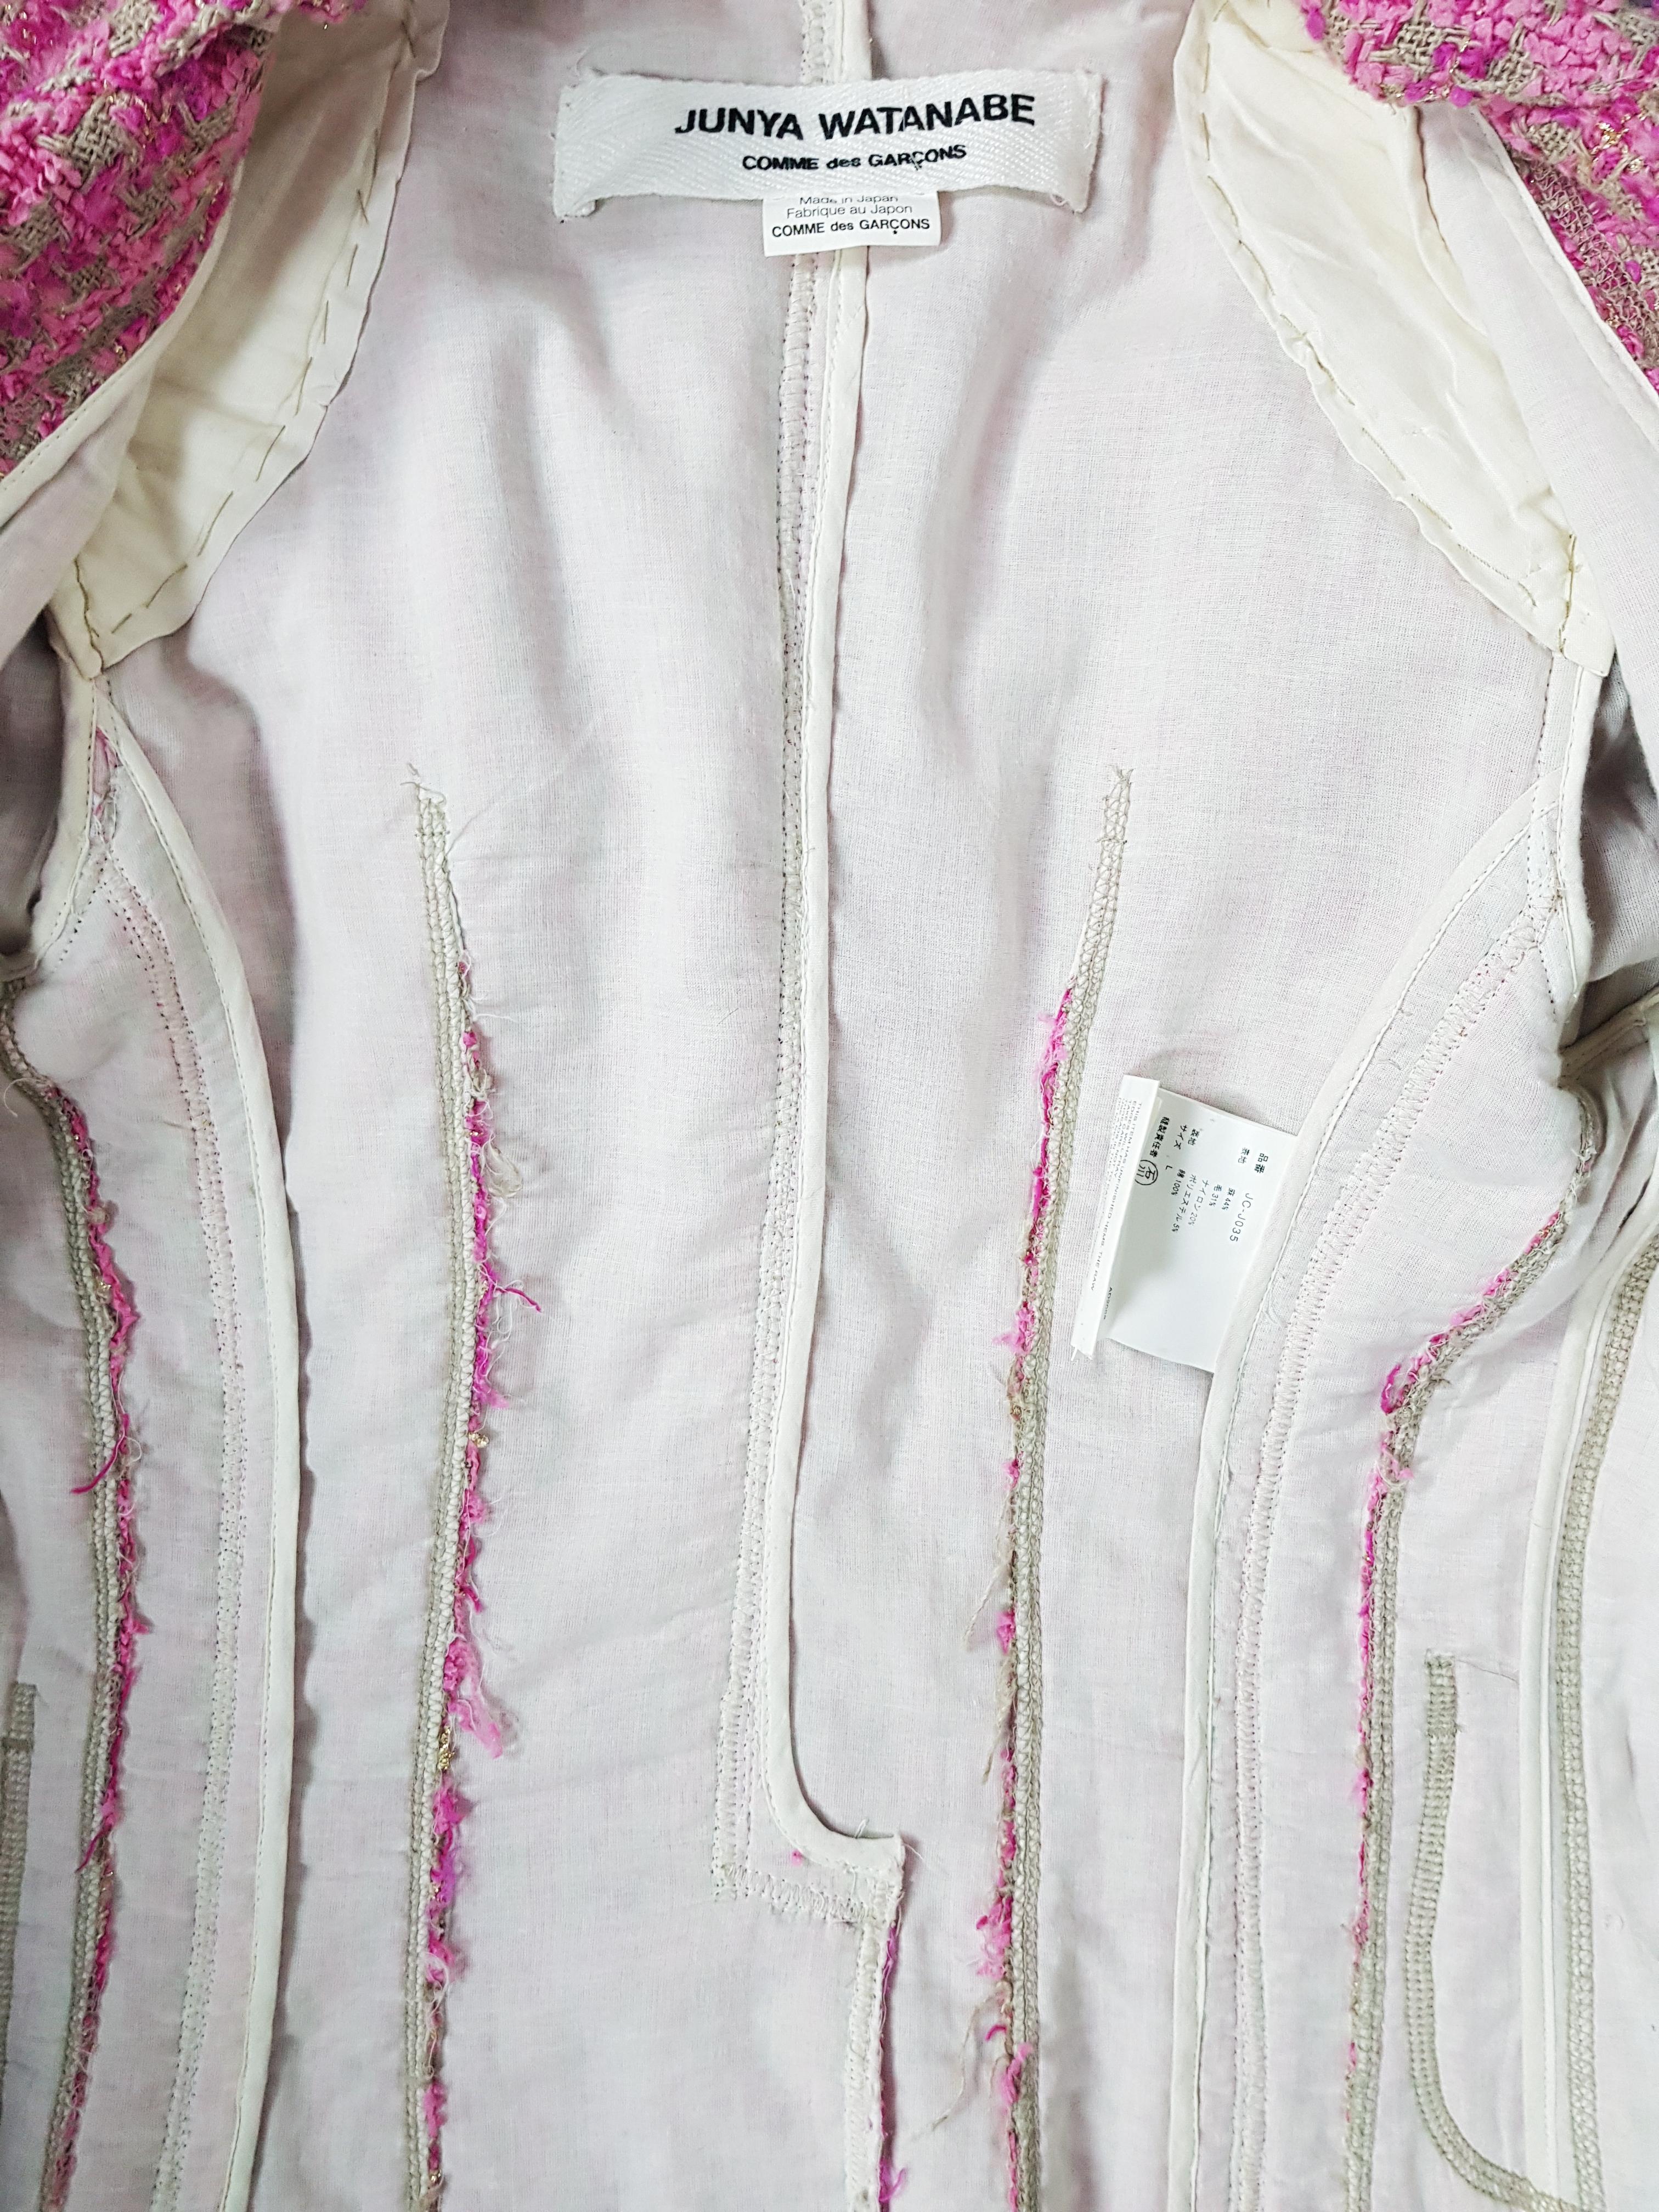 JUNYA WATANABE POUR COMME DES GARÇONS pink tweed Jacket, c. 2000  For Sale 2